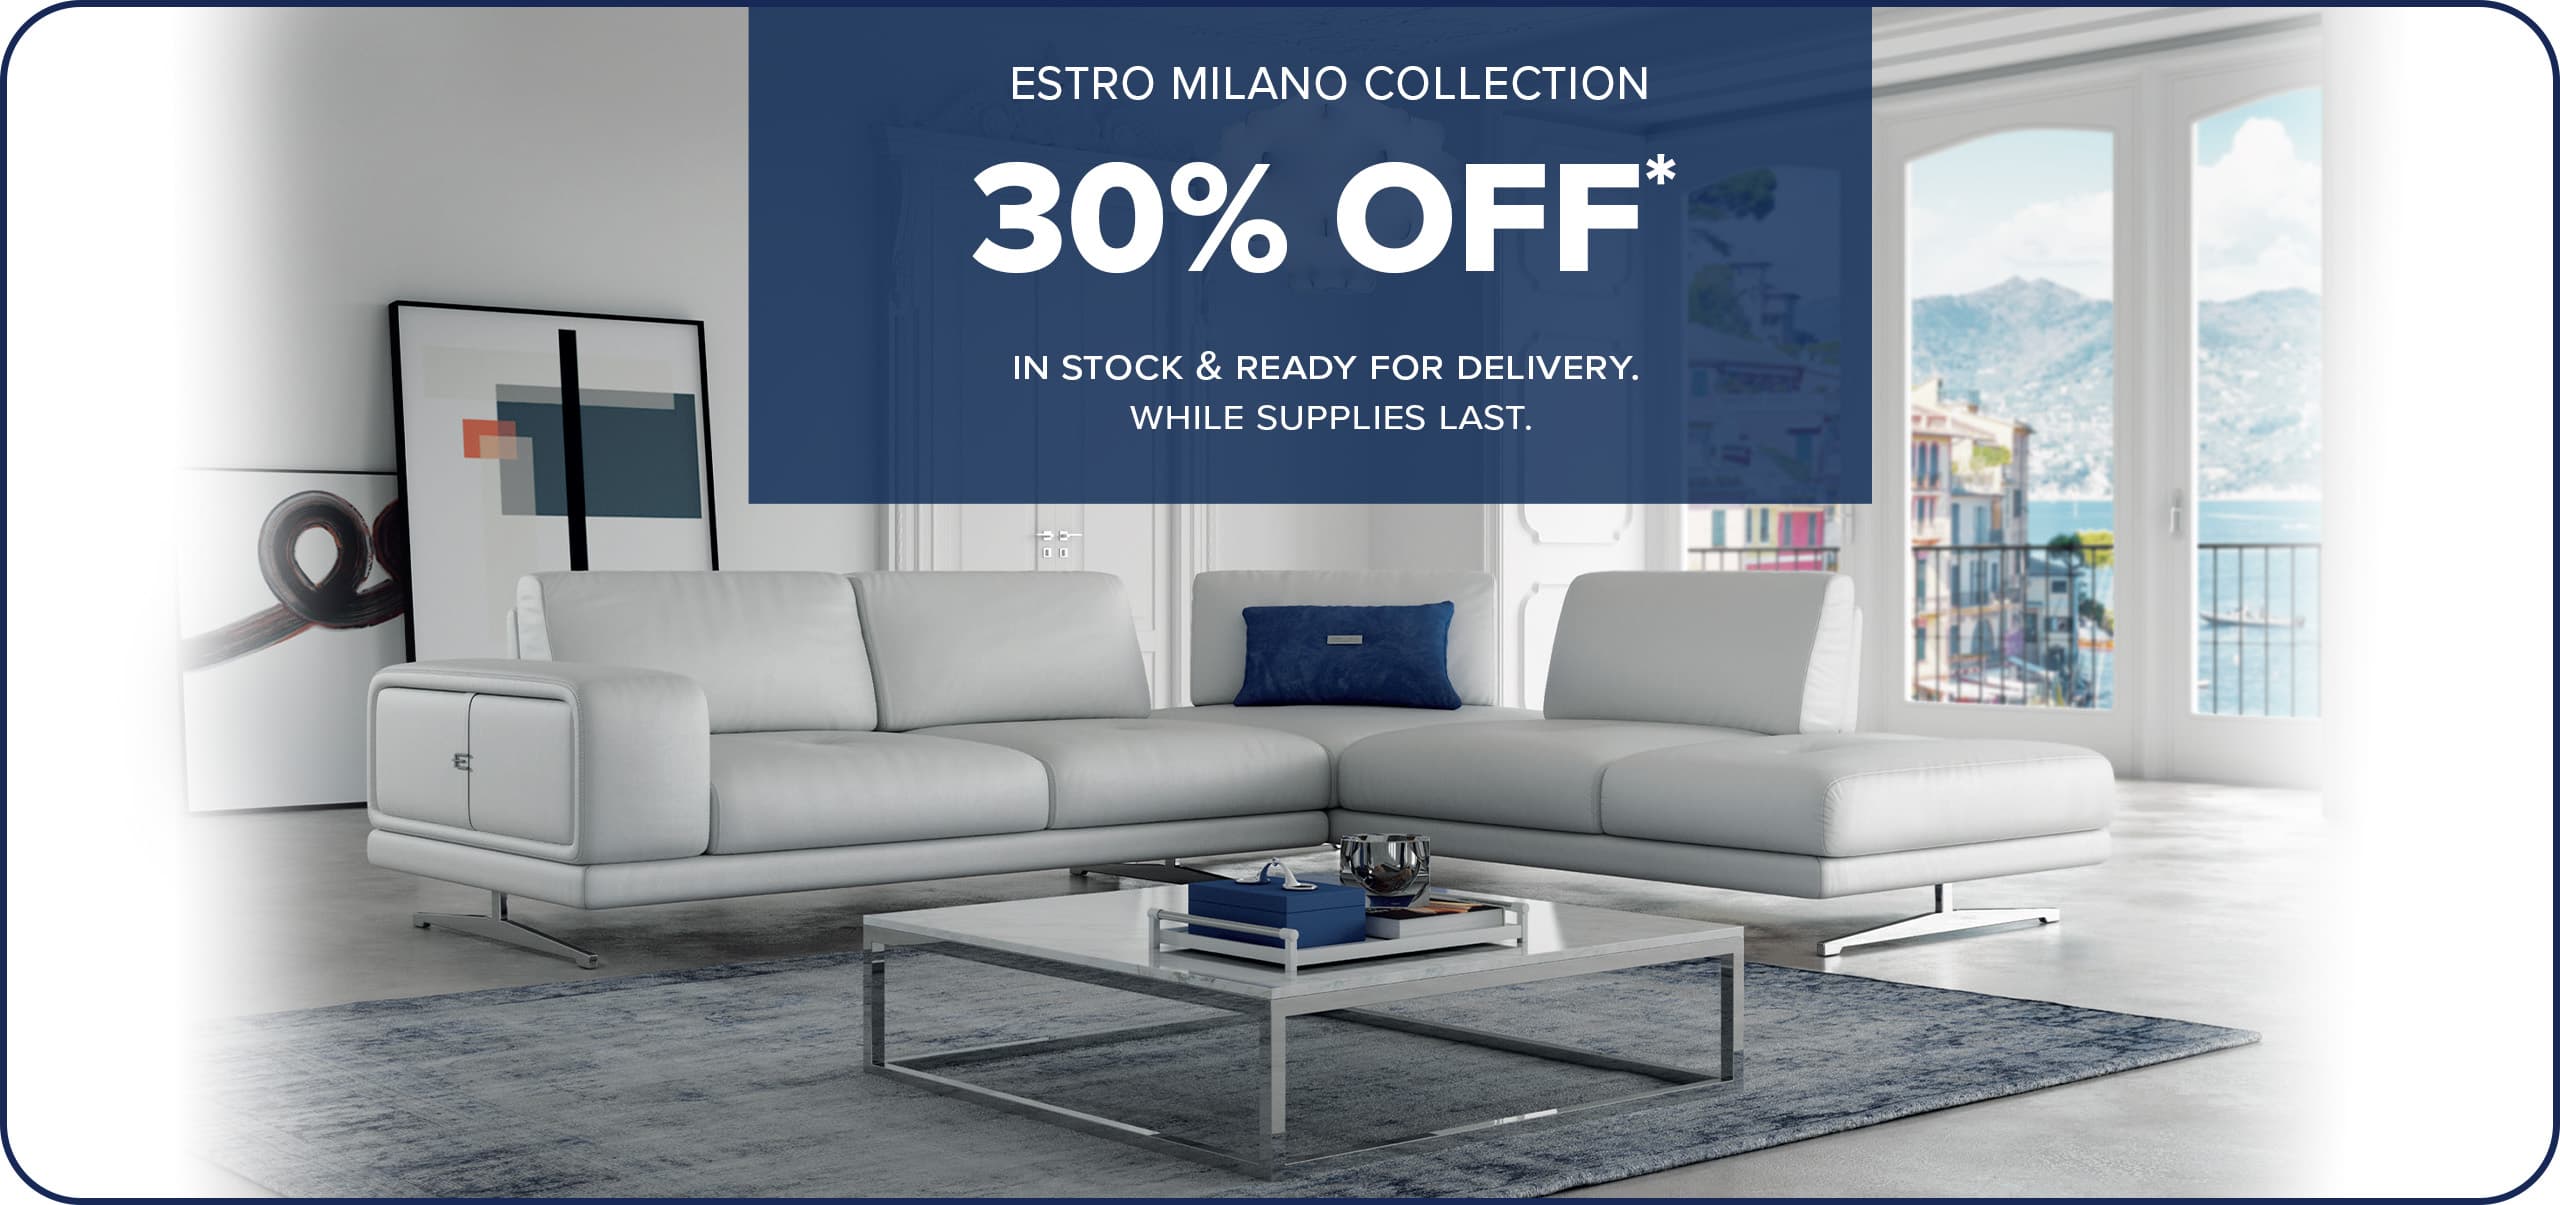 Estro Milano sofas and sectional sale